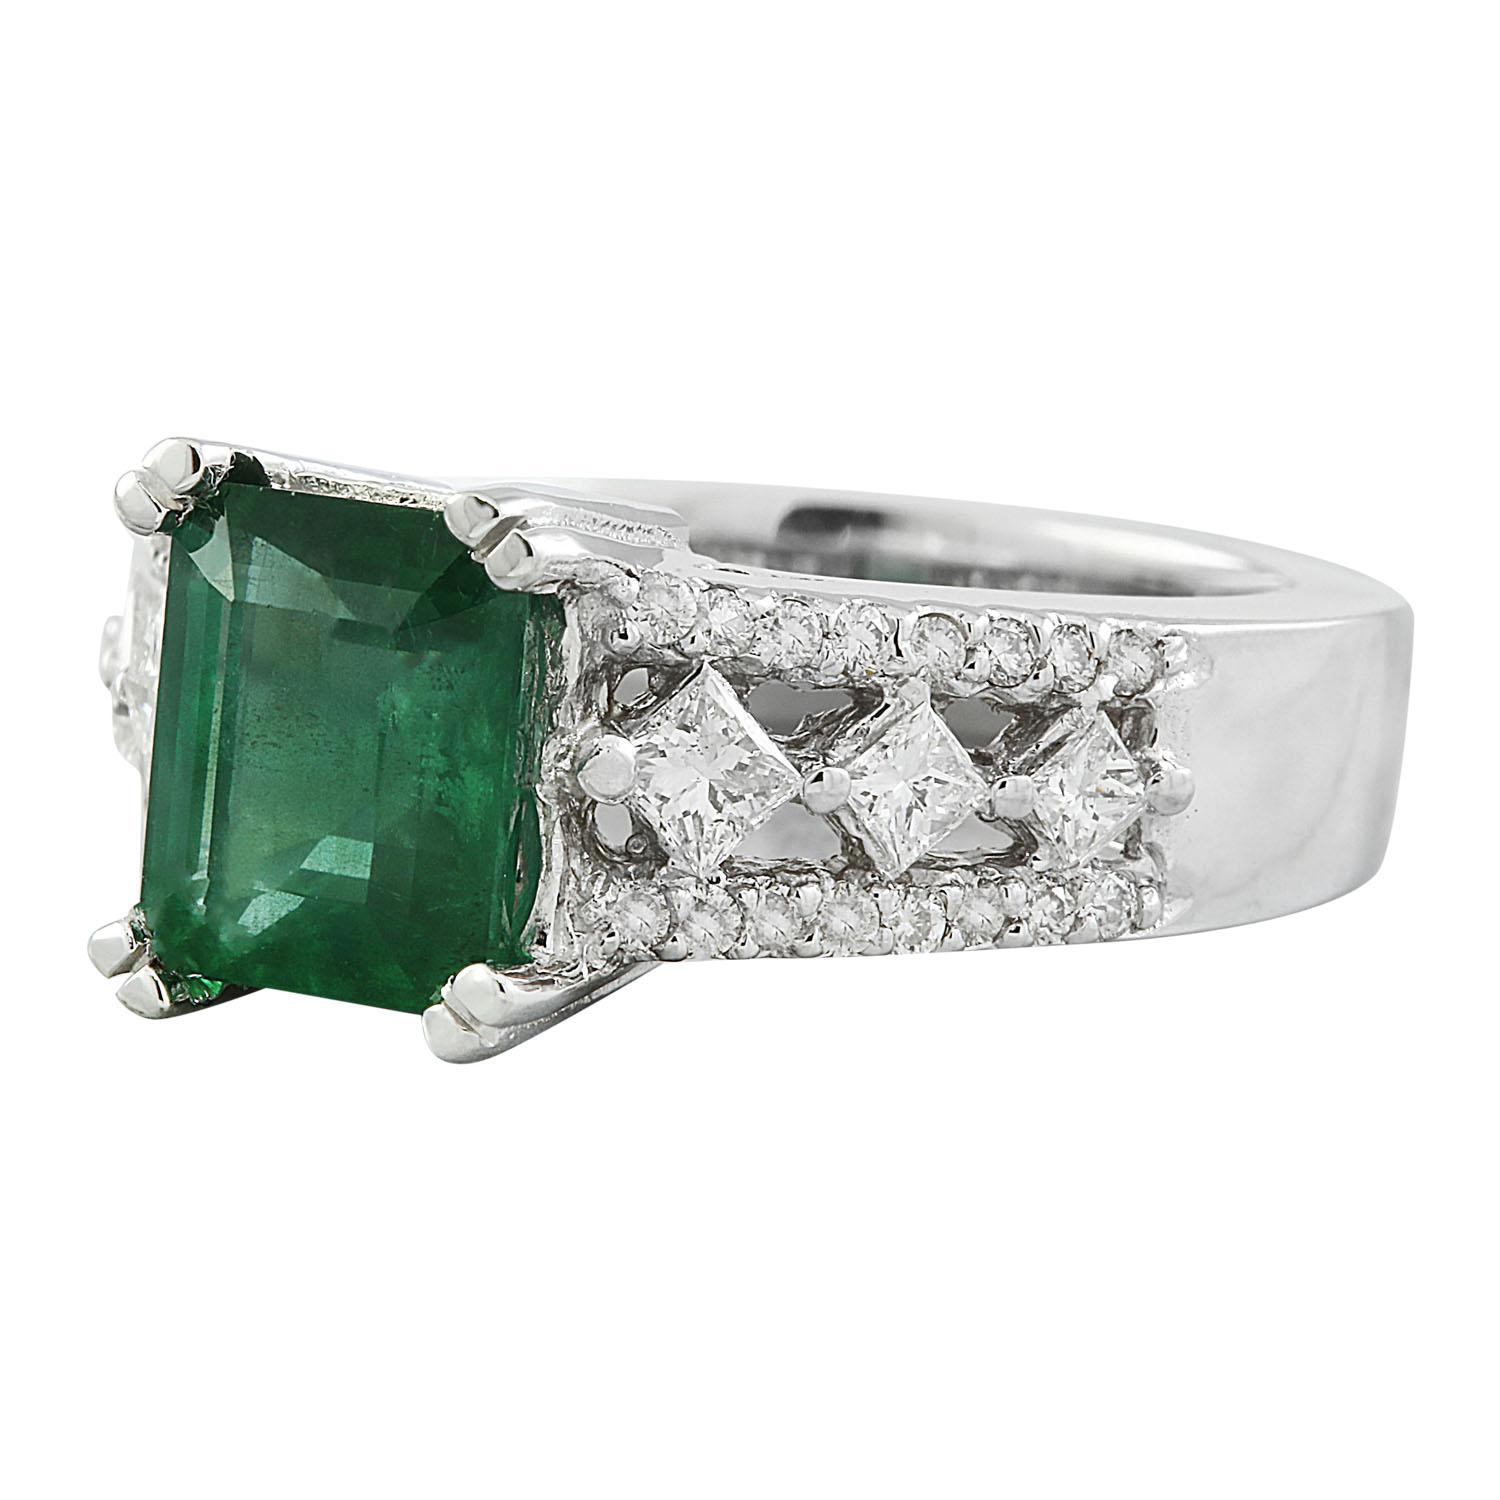 2.95 Carat Natural Emerald 14 Karat Solid White Gold Diamond Ring
Stamped: 14K 
Ring Size 7
Total Ring Weight: 8.1 Grams 
Emerald Weight 2.17 Carat (9.00x7.00 Millimeters)
Natural Emerald Treatment: Oil Only
Diamond Weight: 0.78 Carat (F-G Color,